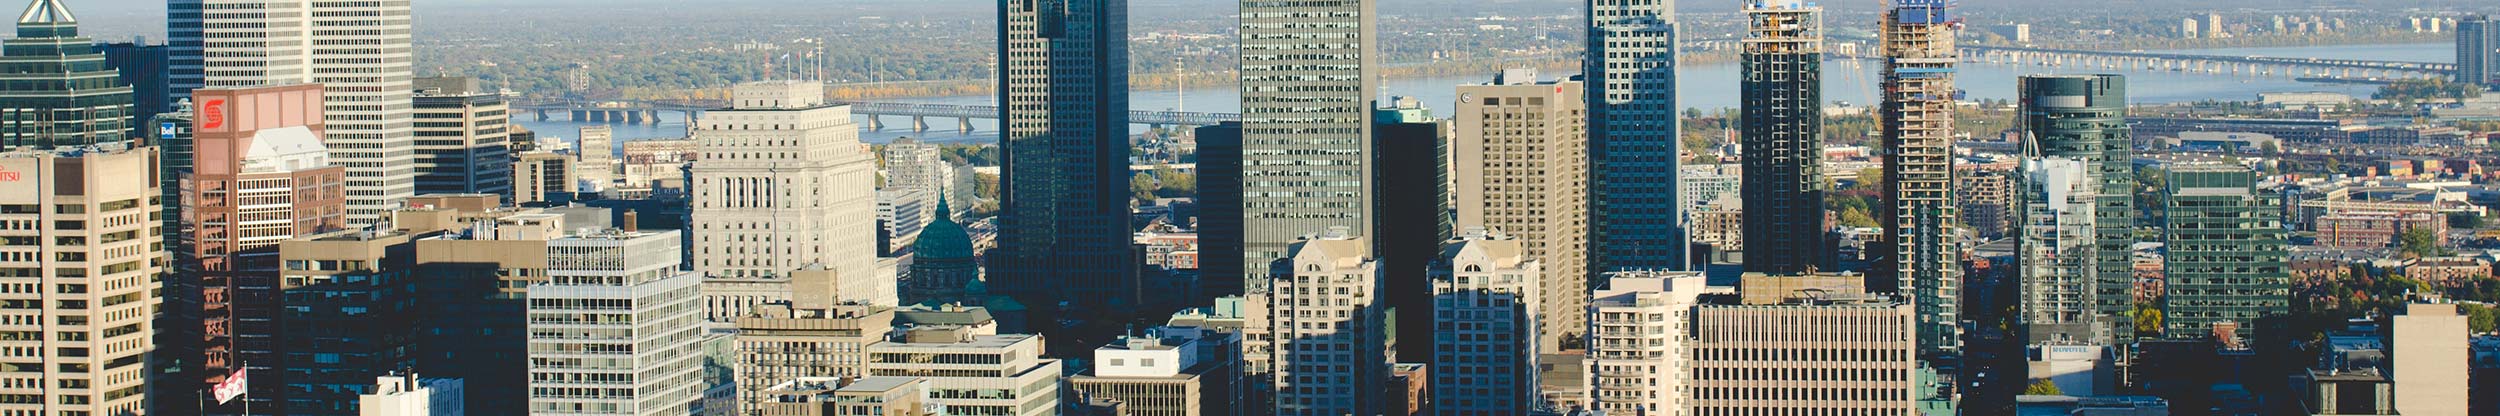 Kanada Montreal Skyline